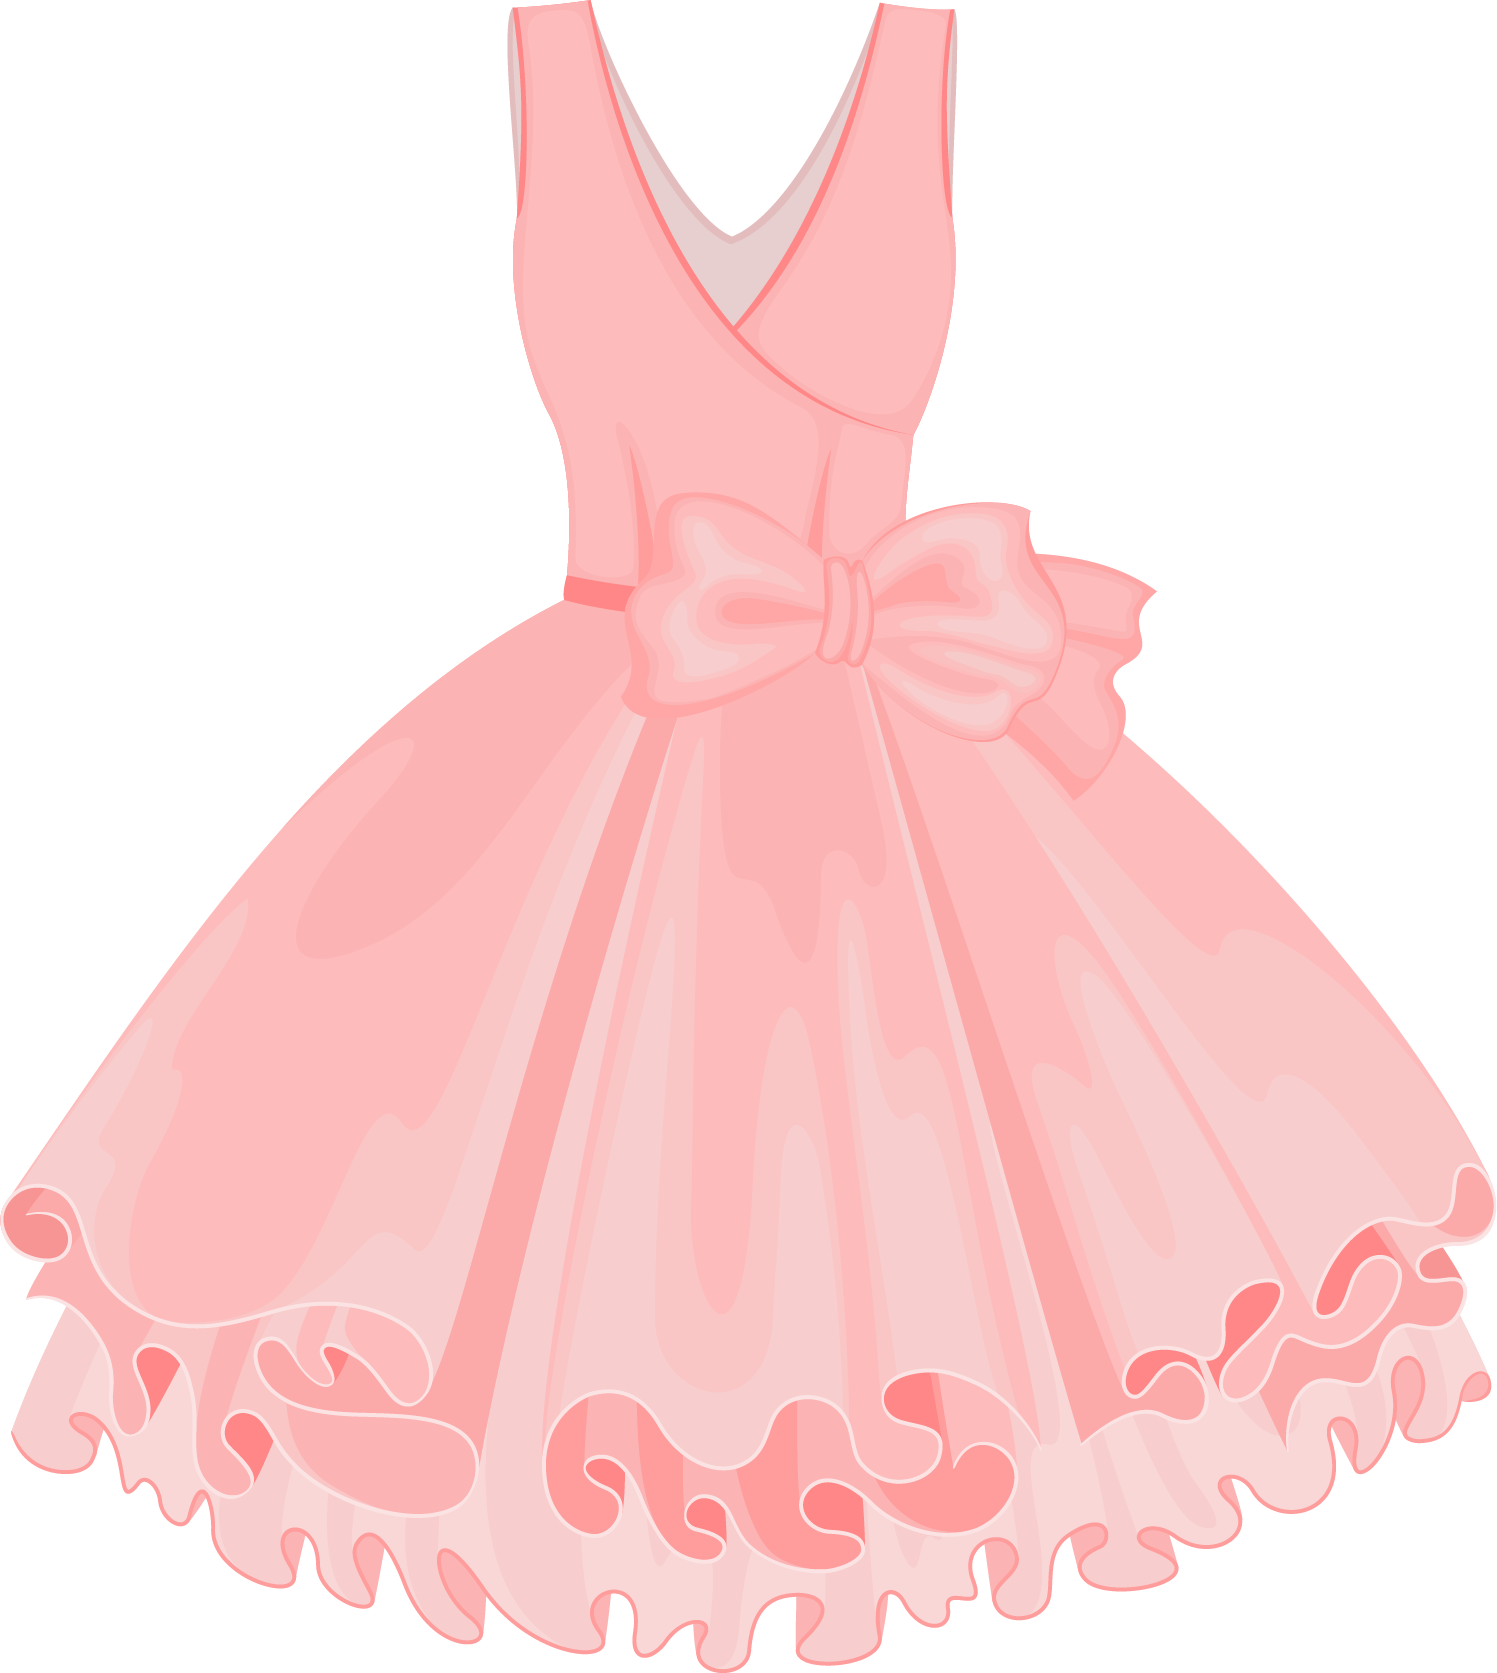 Pink Painted Dress Vector Skirt Tutu Clipart Vector Clip Art Library ...